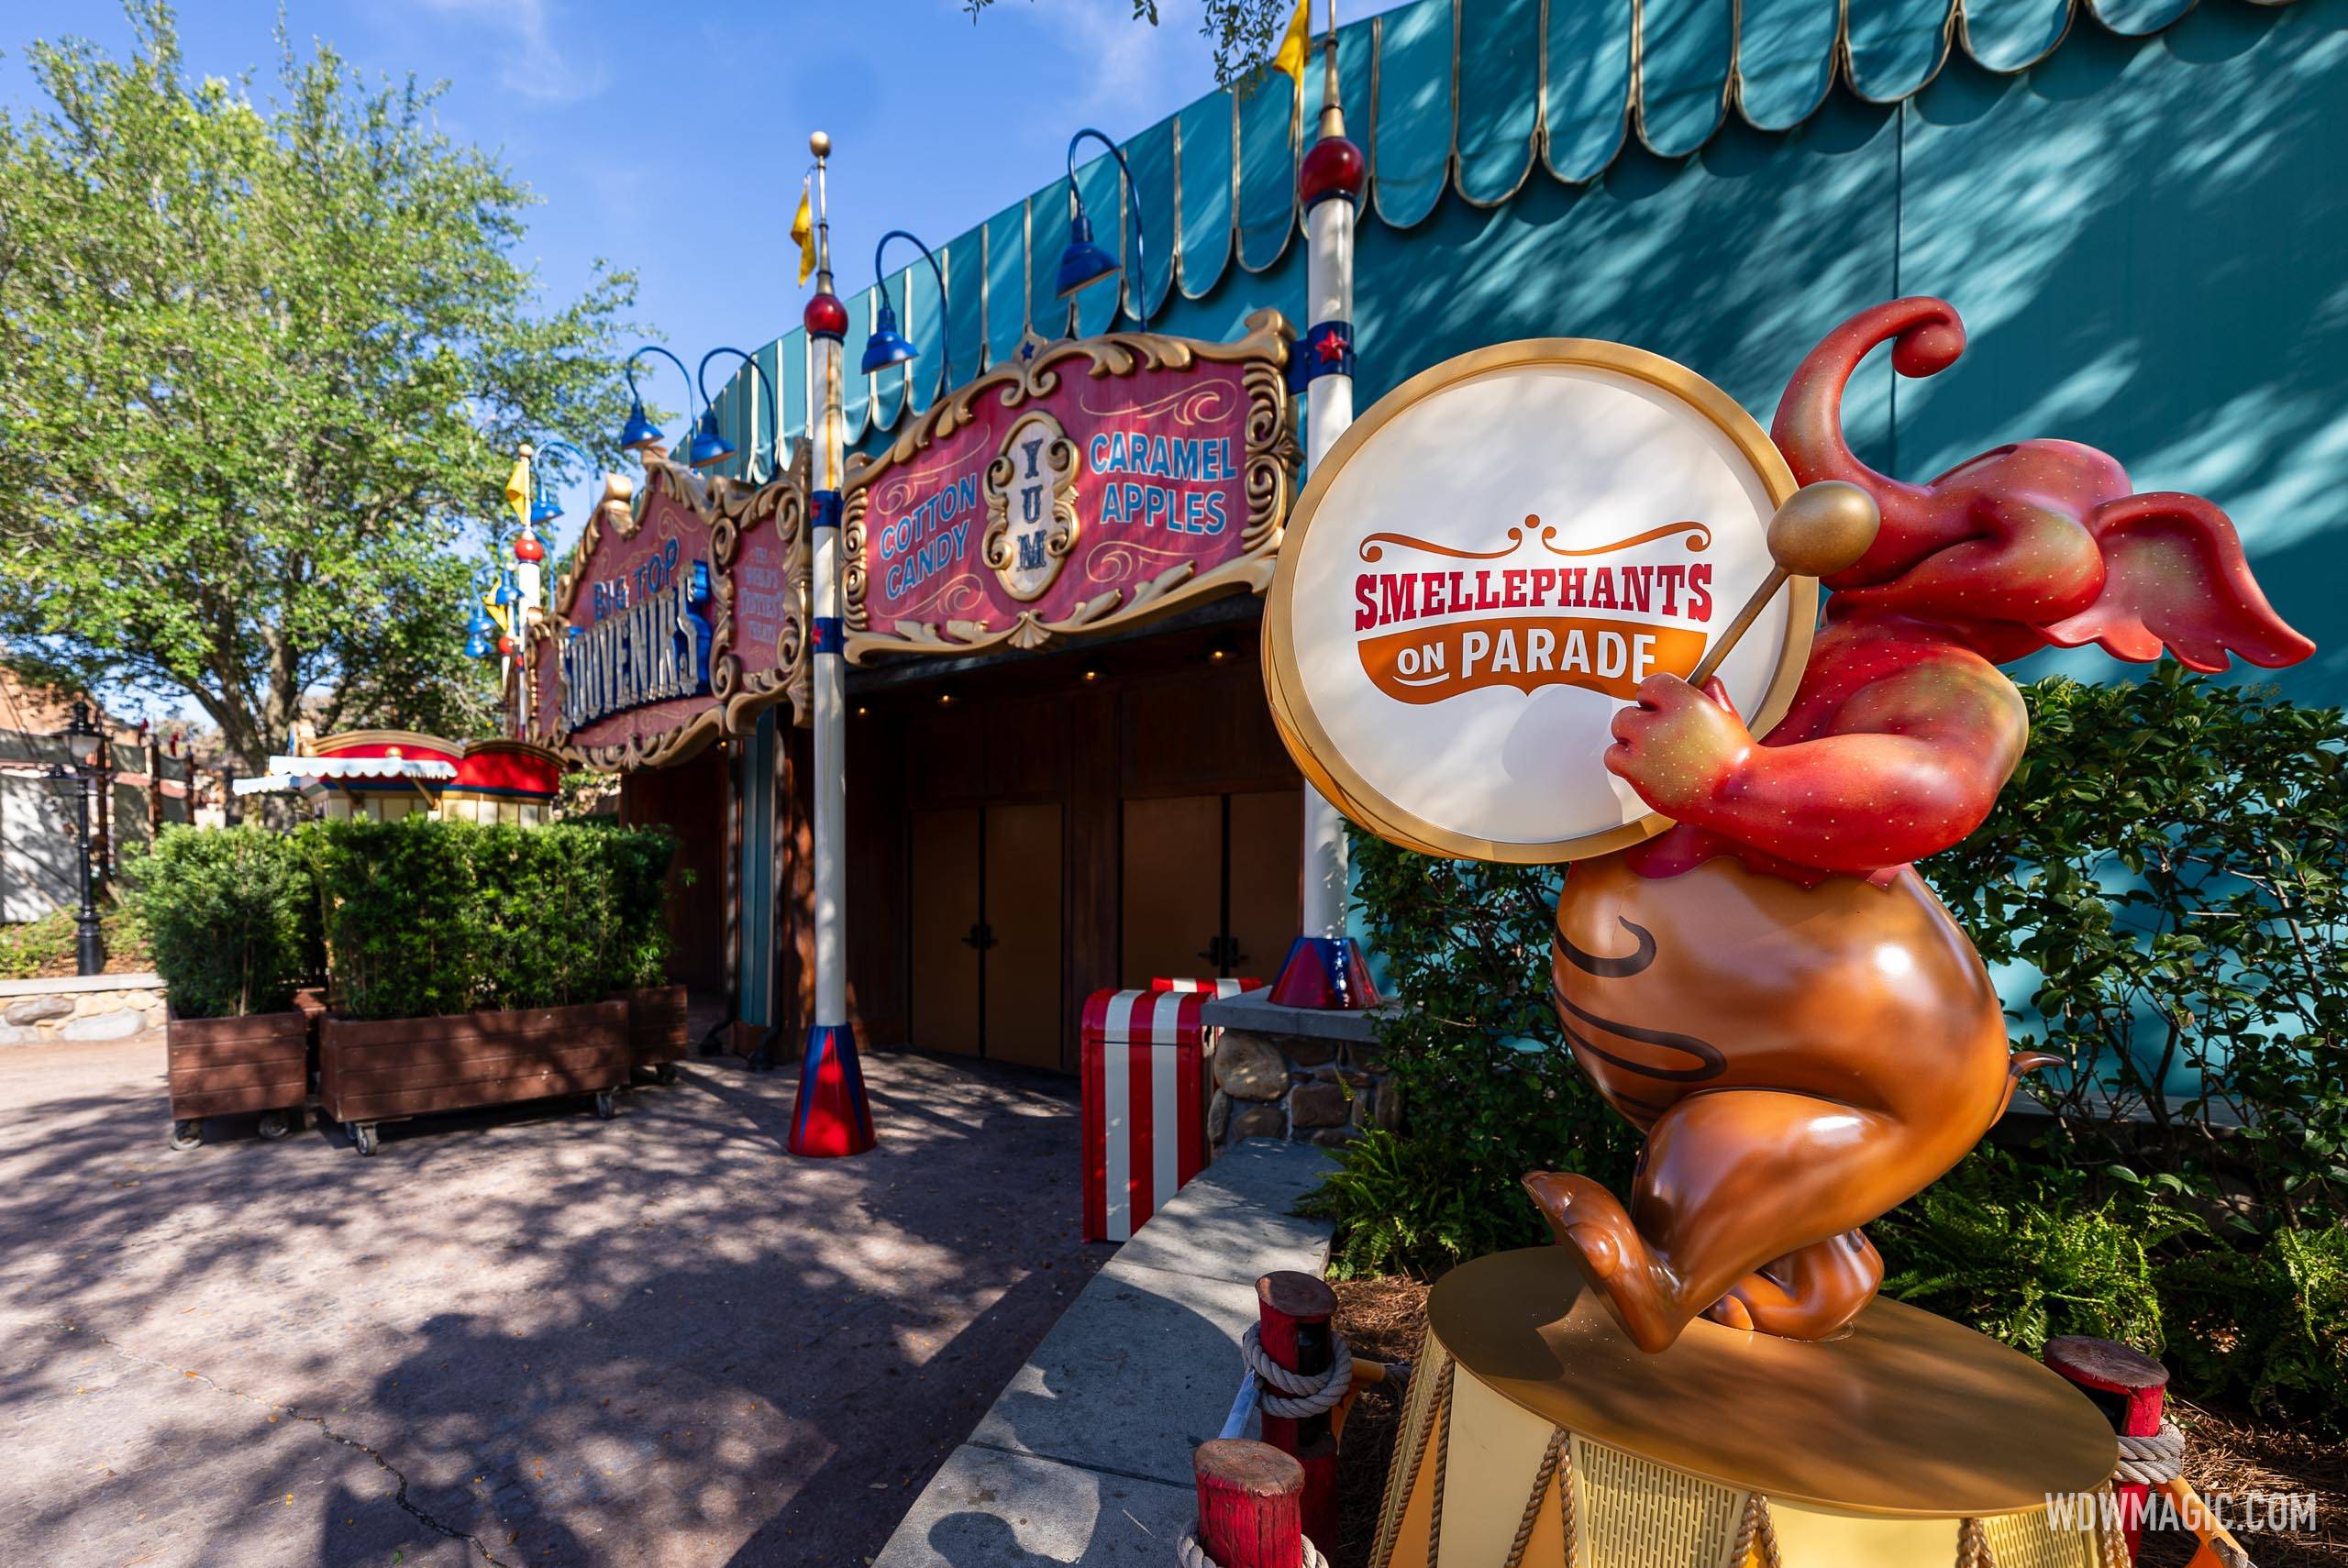 More 'Smellephants' now gracing Storybook Circus at Disney World's Magic Kingdom